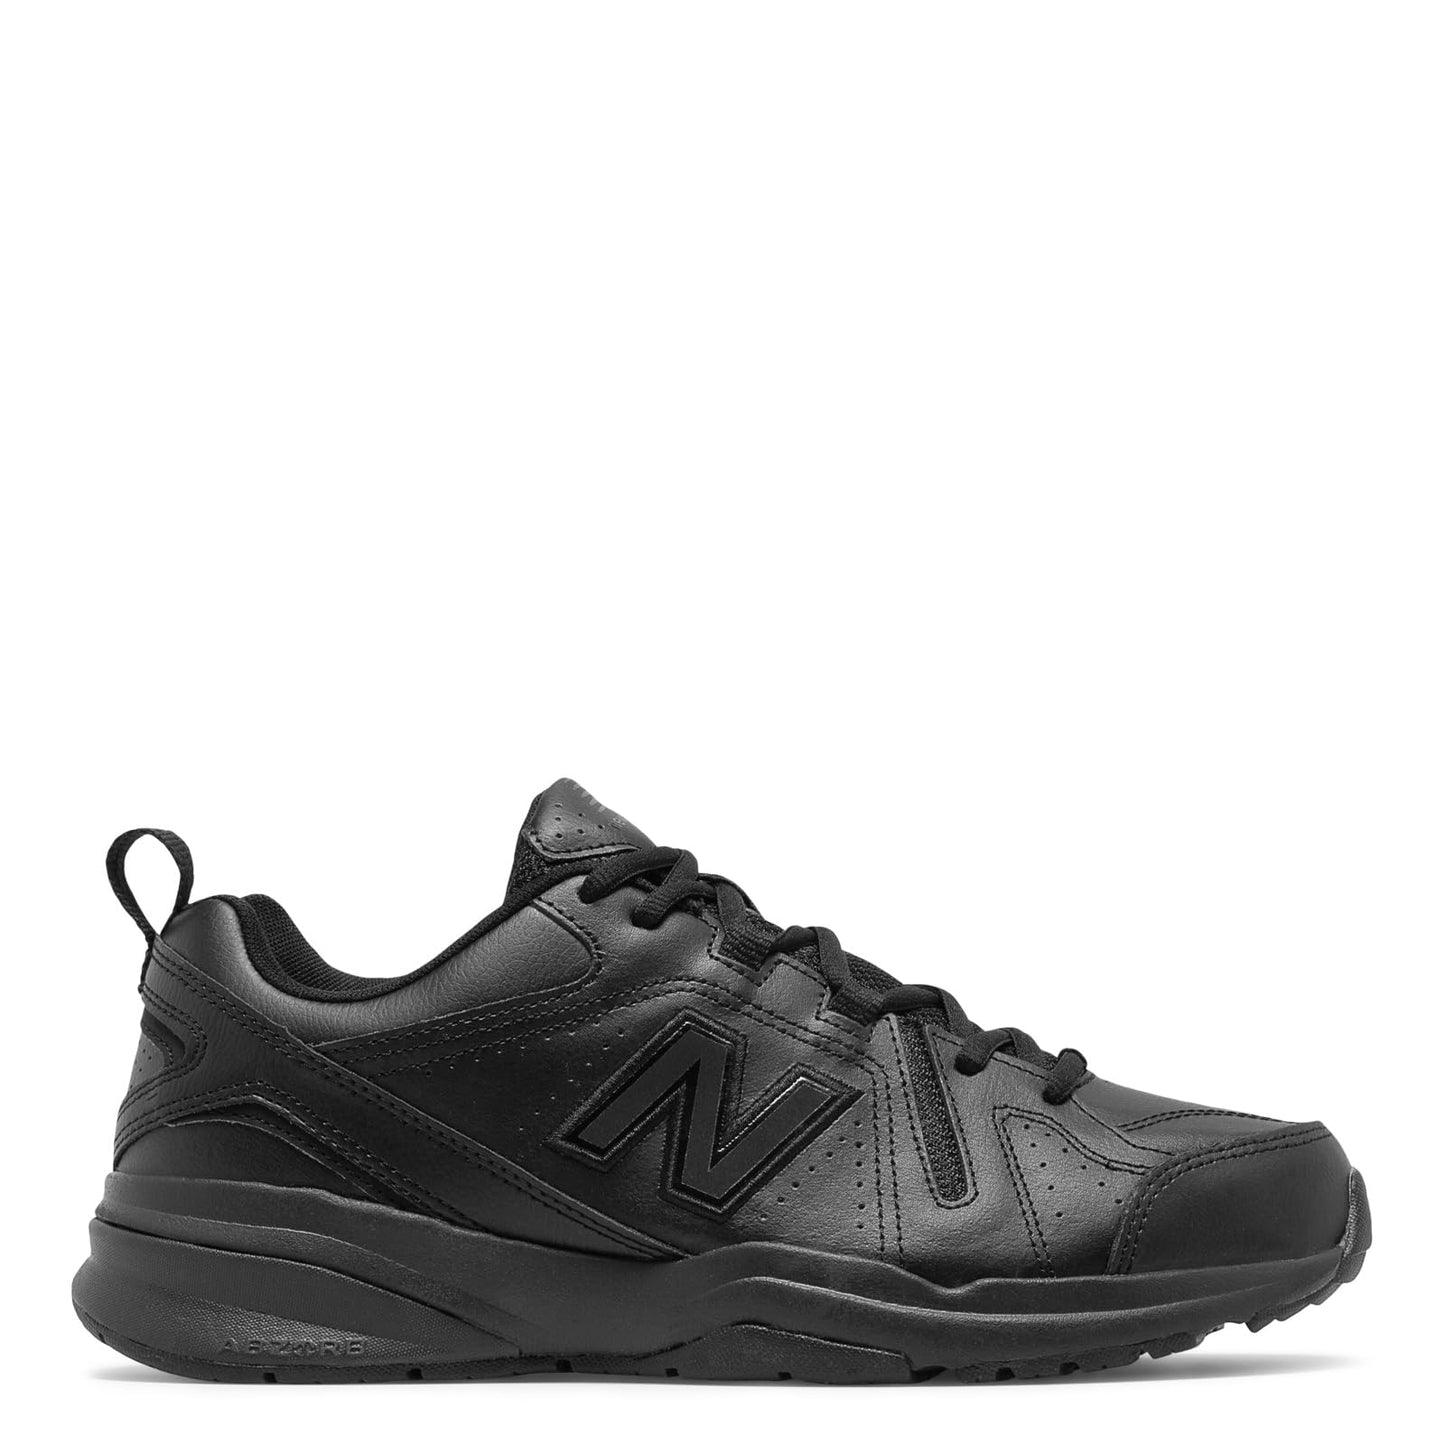 Sneaker - New Balance Men's 608 V5 Casual Comfort Cross Trainer